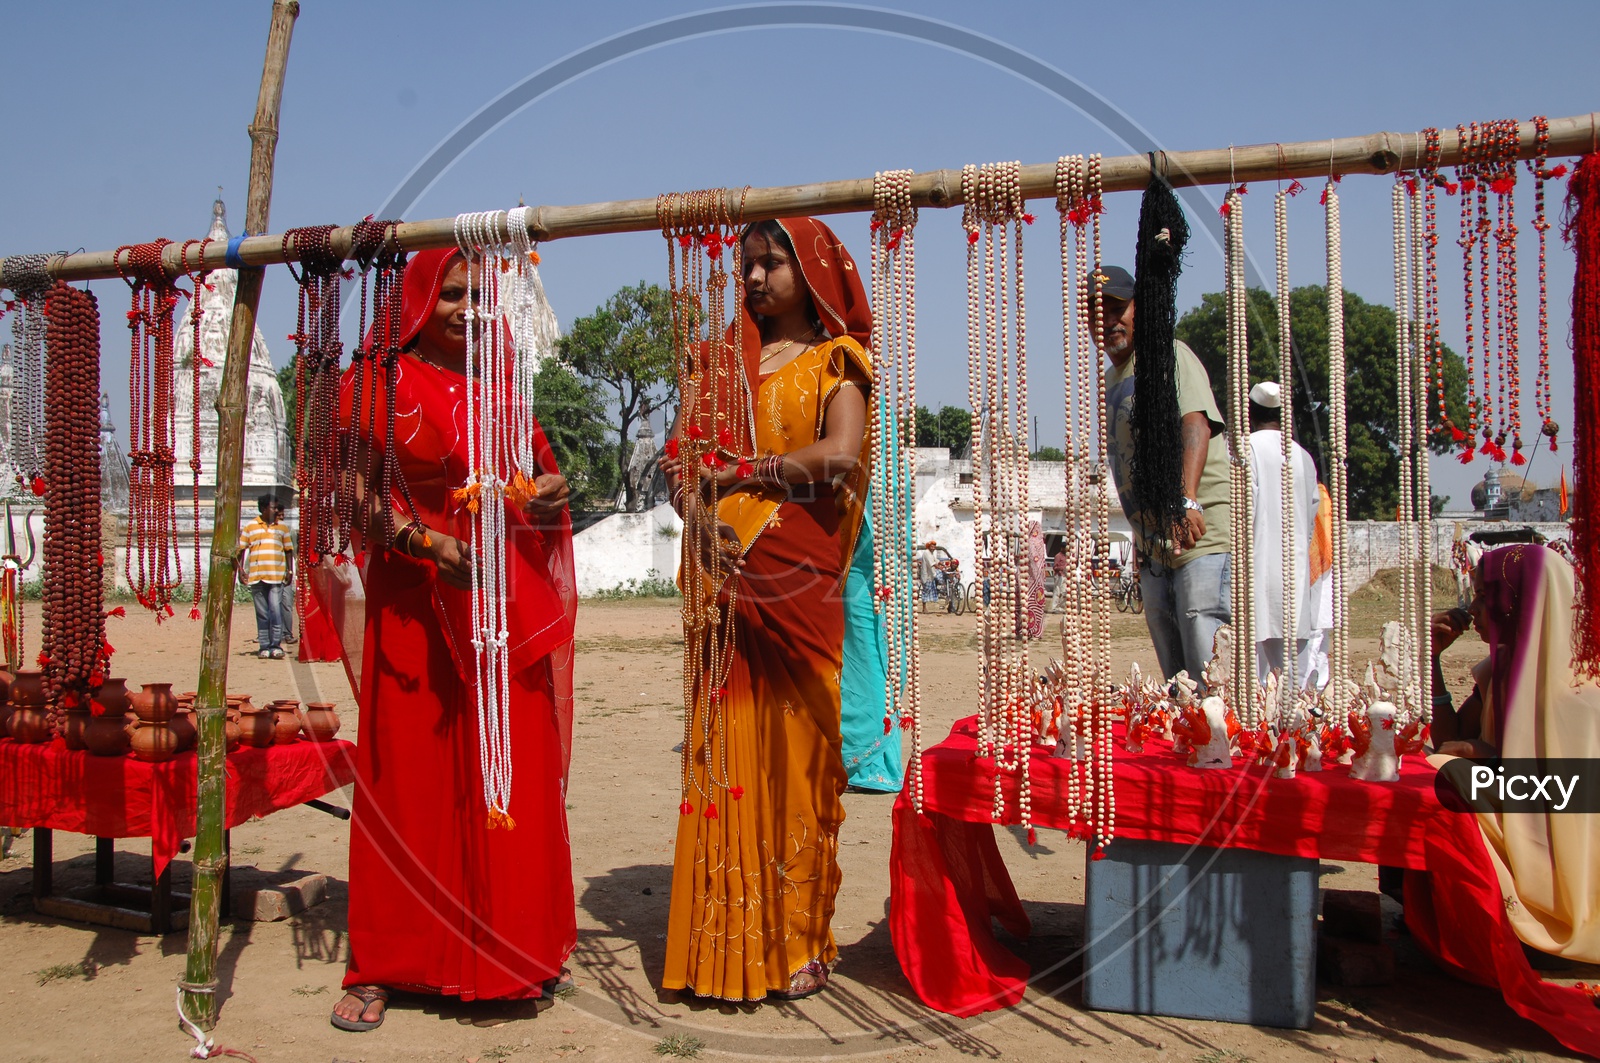 Indian Female Vendors at a Hindu Temple